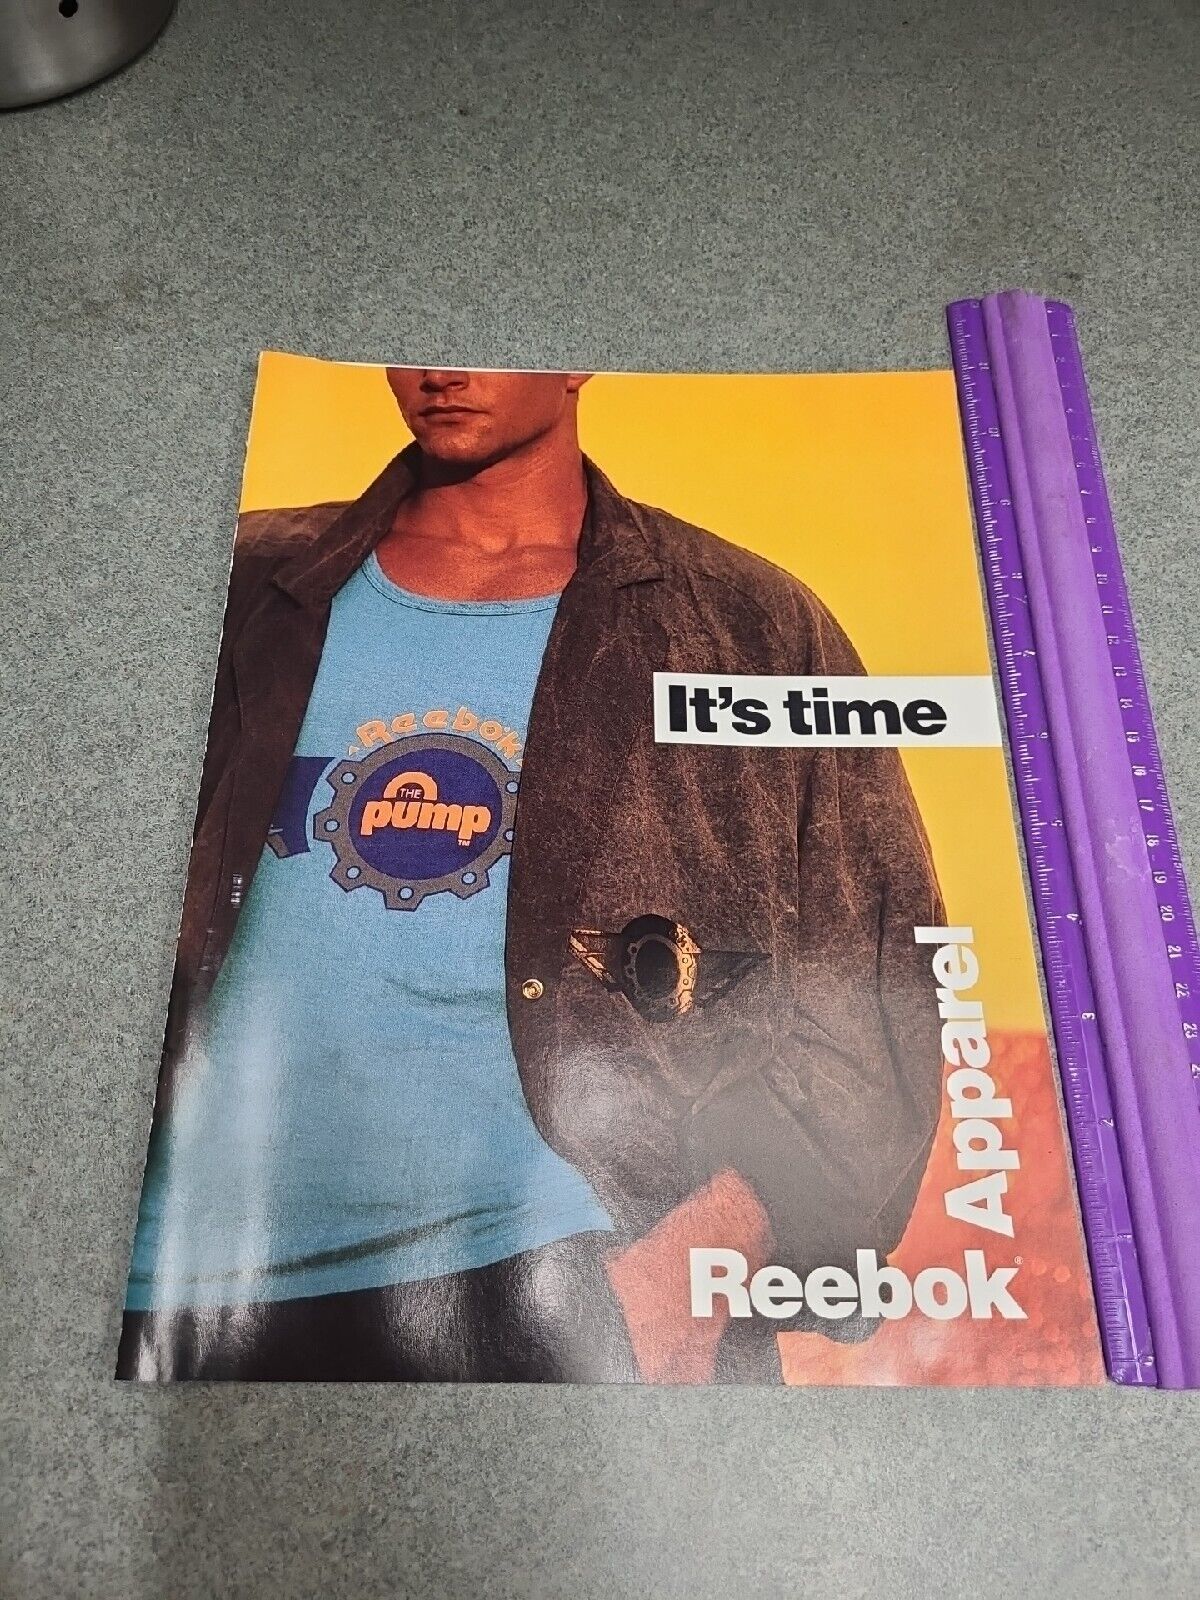 Reebok The Pump Apparel Promo 8 Page Magazine Insert Print Ad Vintage 1991